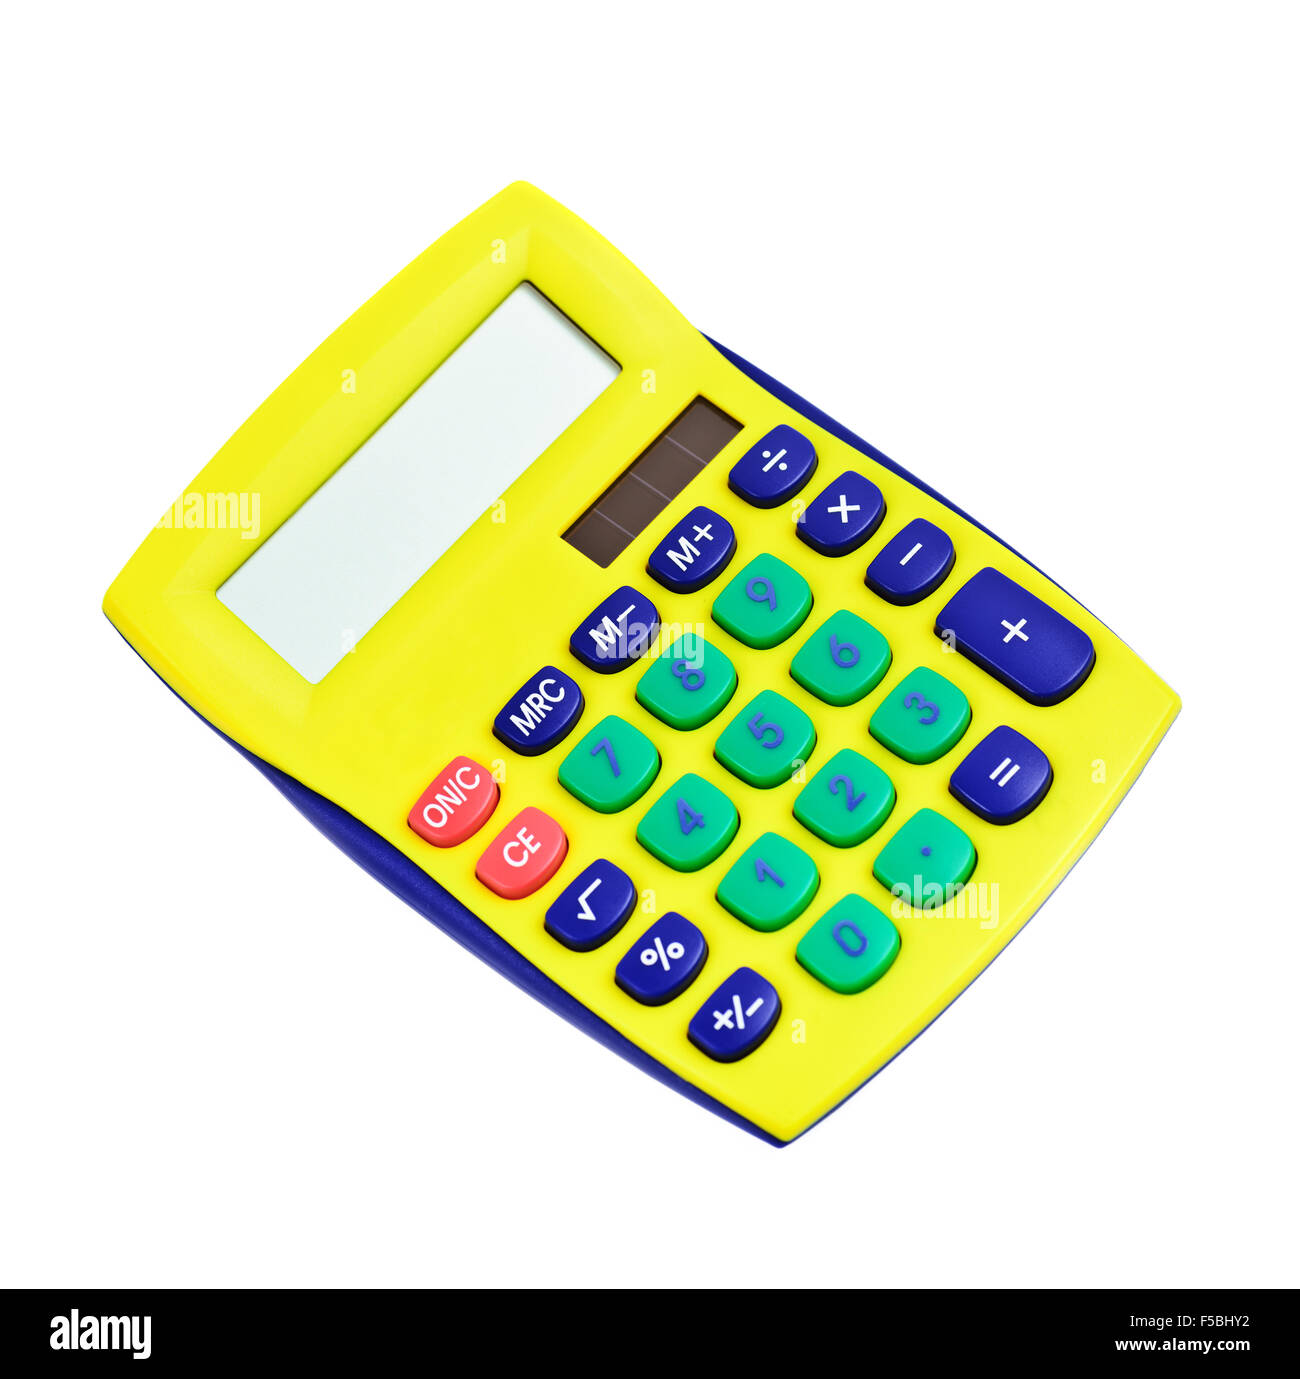 Calculadora moderna de color amarillo aislado en blanco Foto de stock